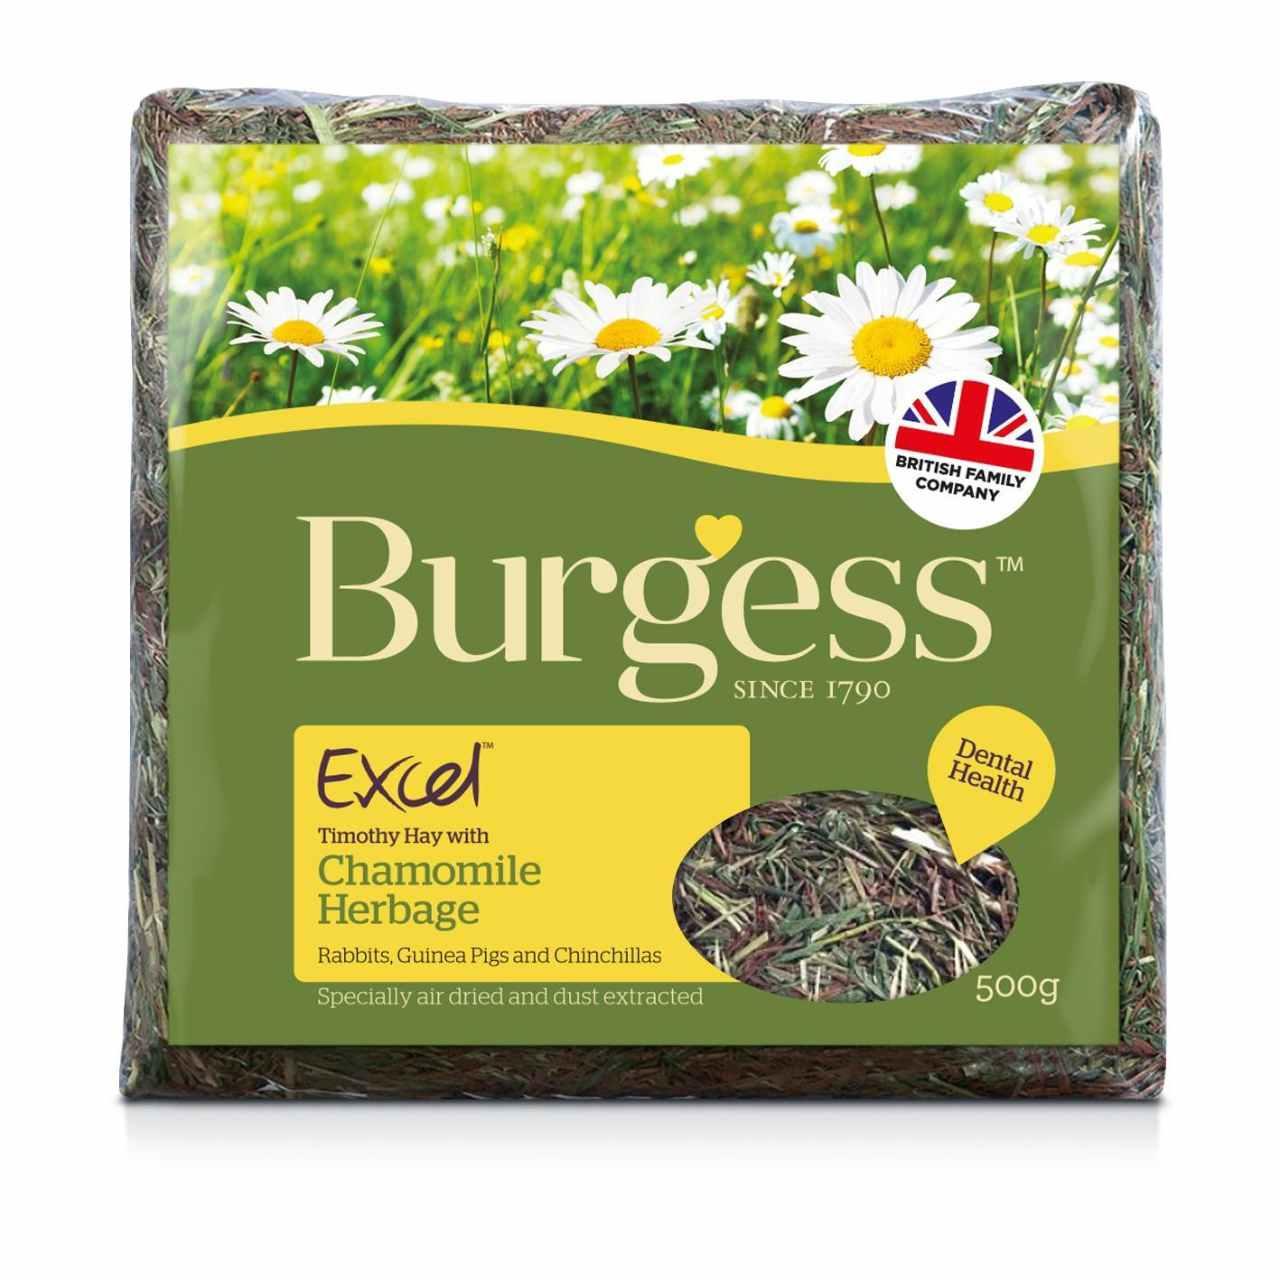 An image of Burgess Excel Chamomile Herbage Feeding Hay